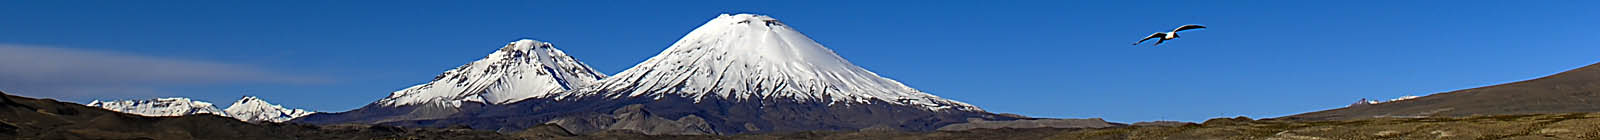 Parinacota, Pomerape, volcanoes, Chile - Banner